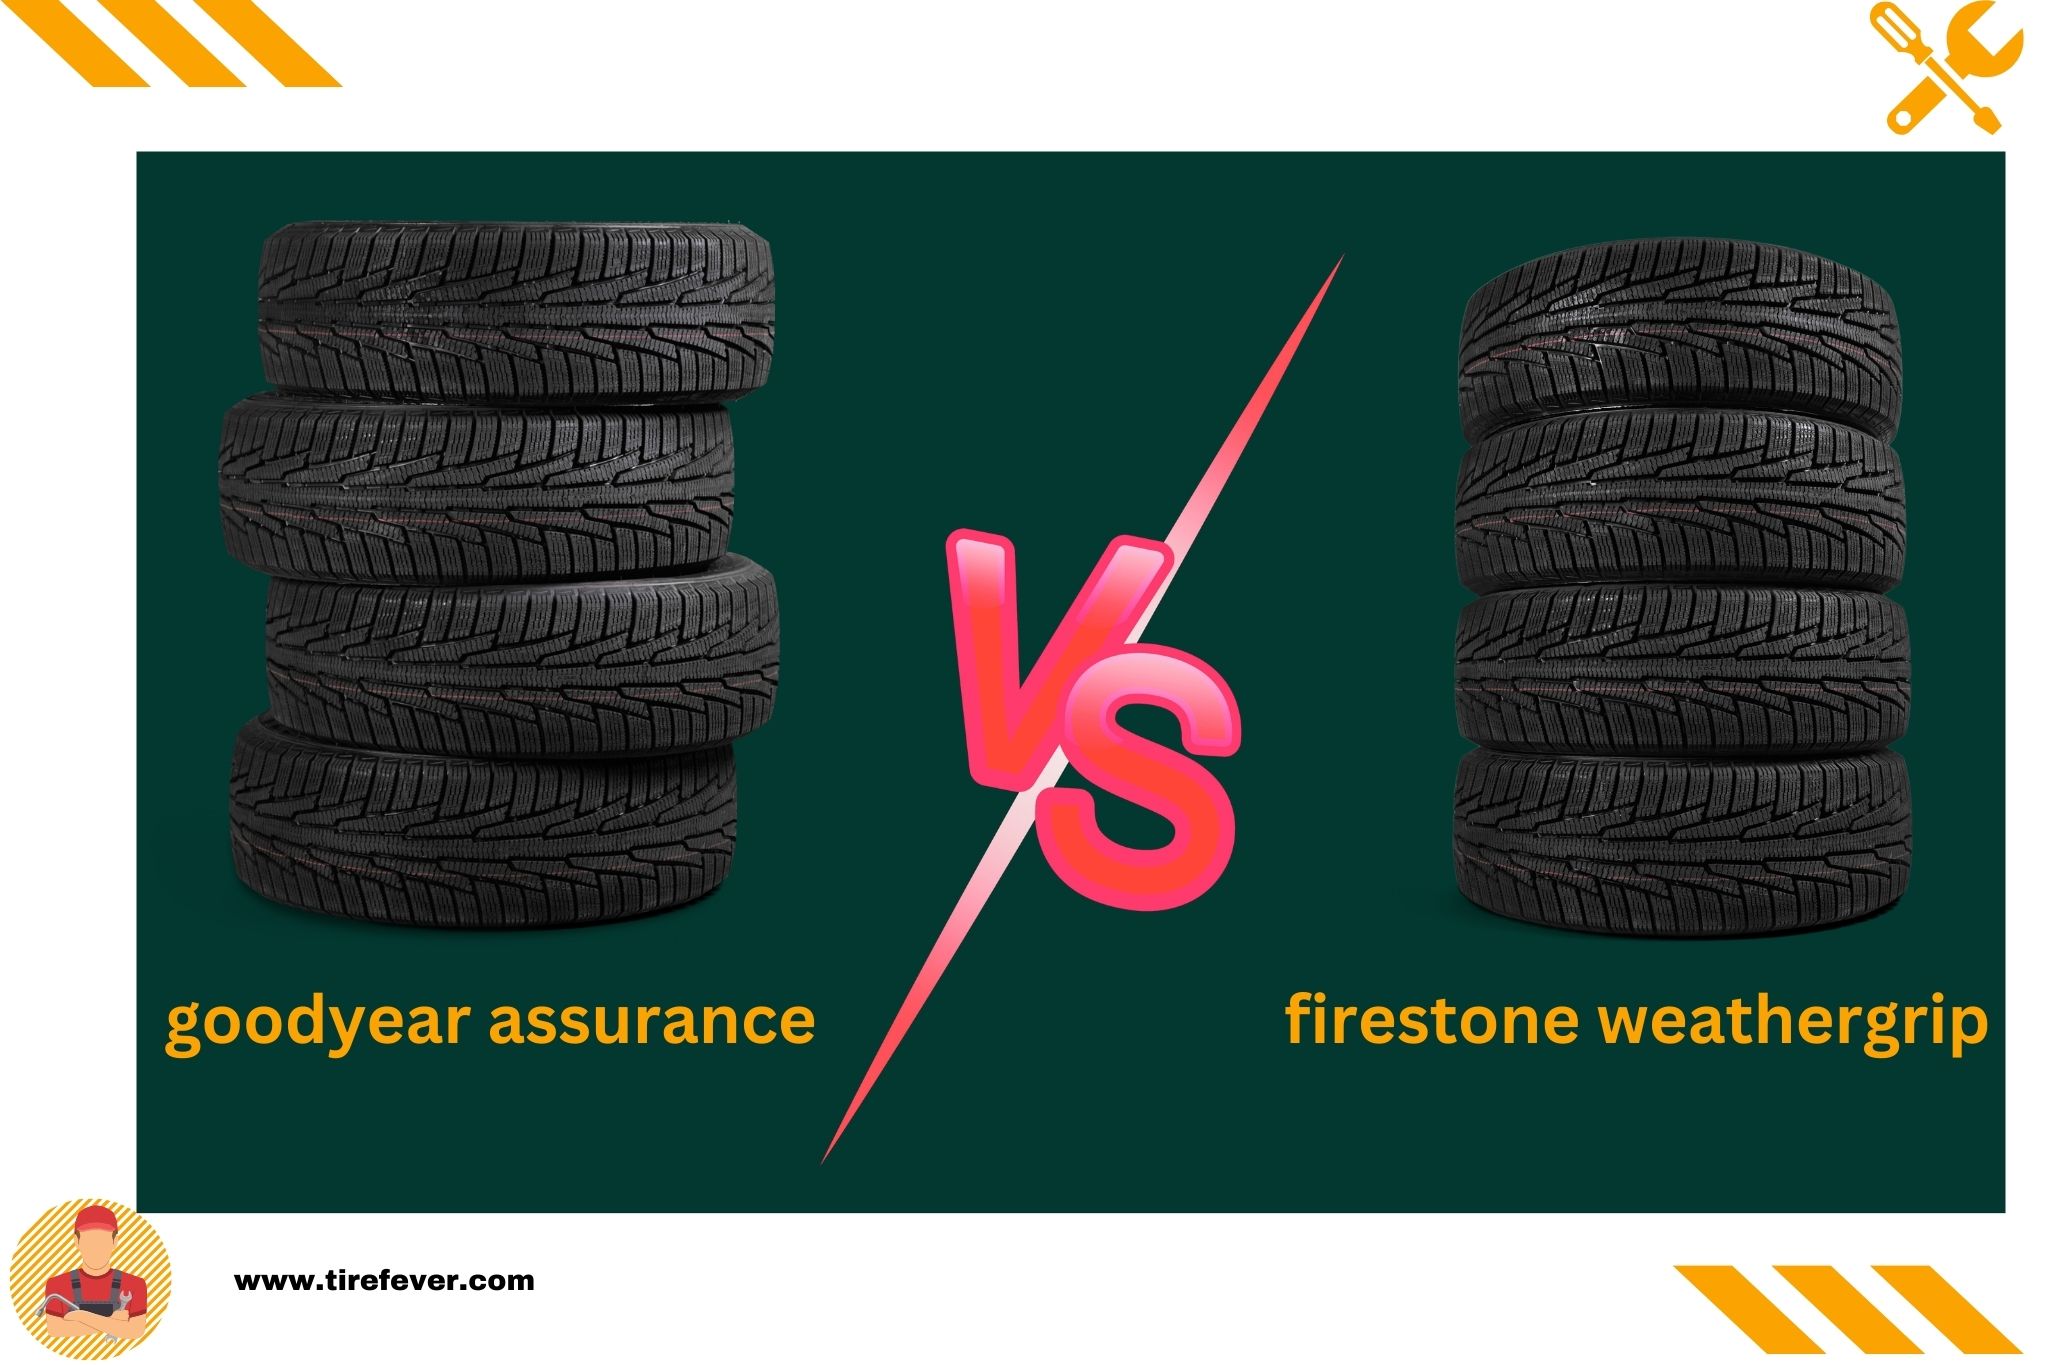 goodyear assurance vs firestone weathergrip